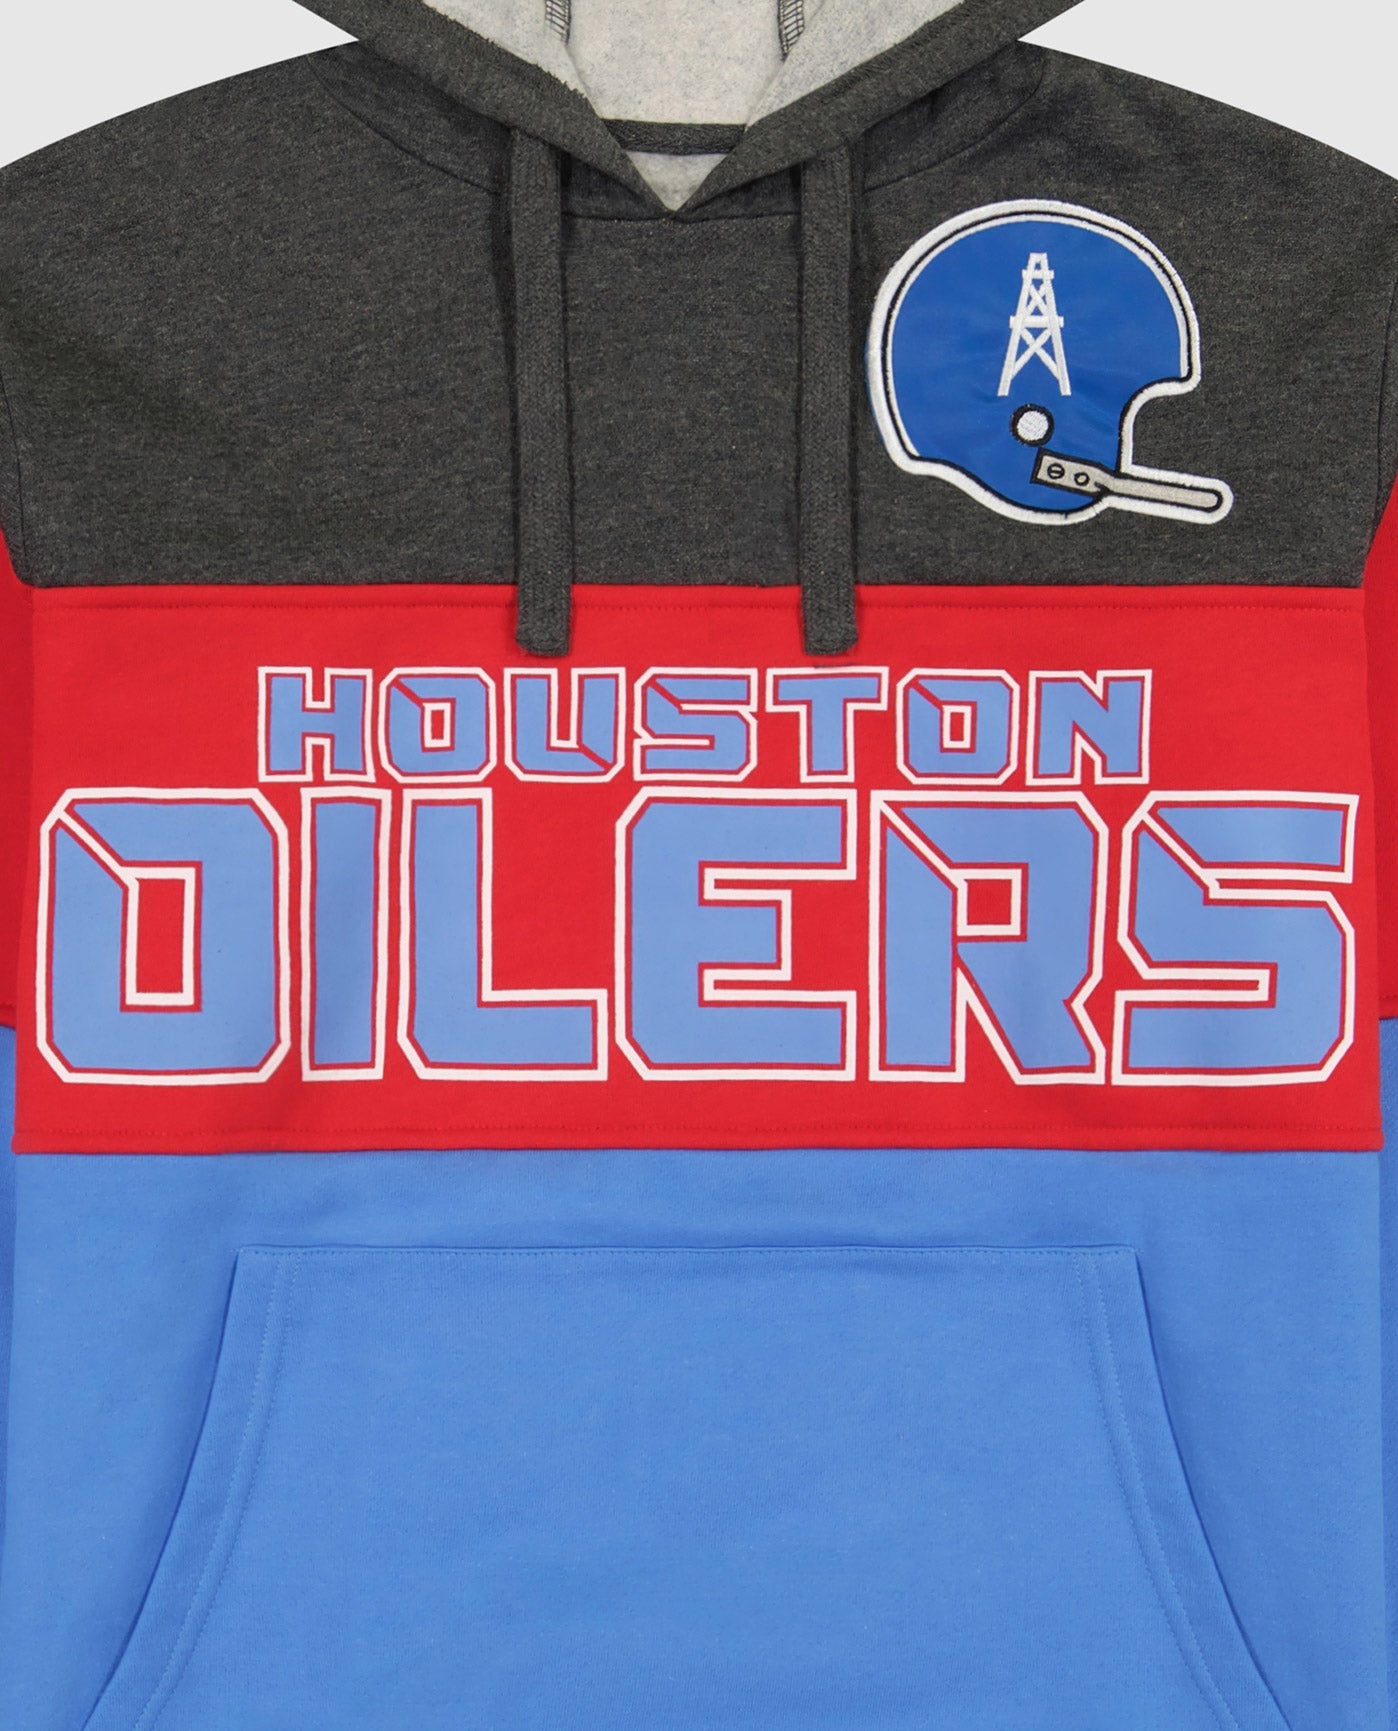 Oilers Sweatshirt 